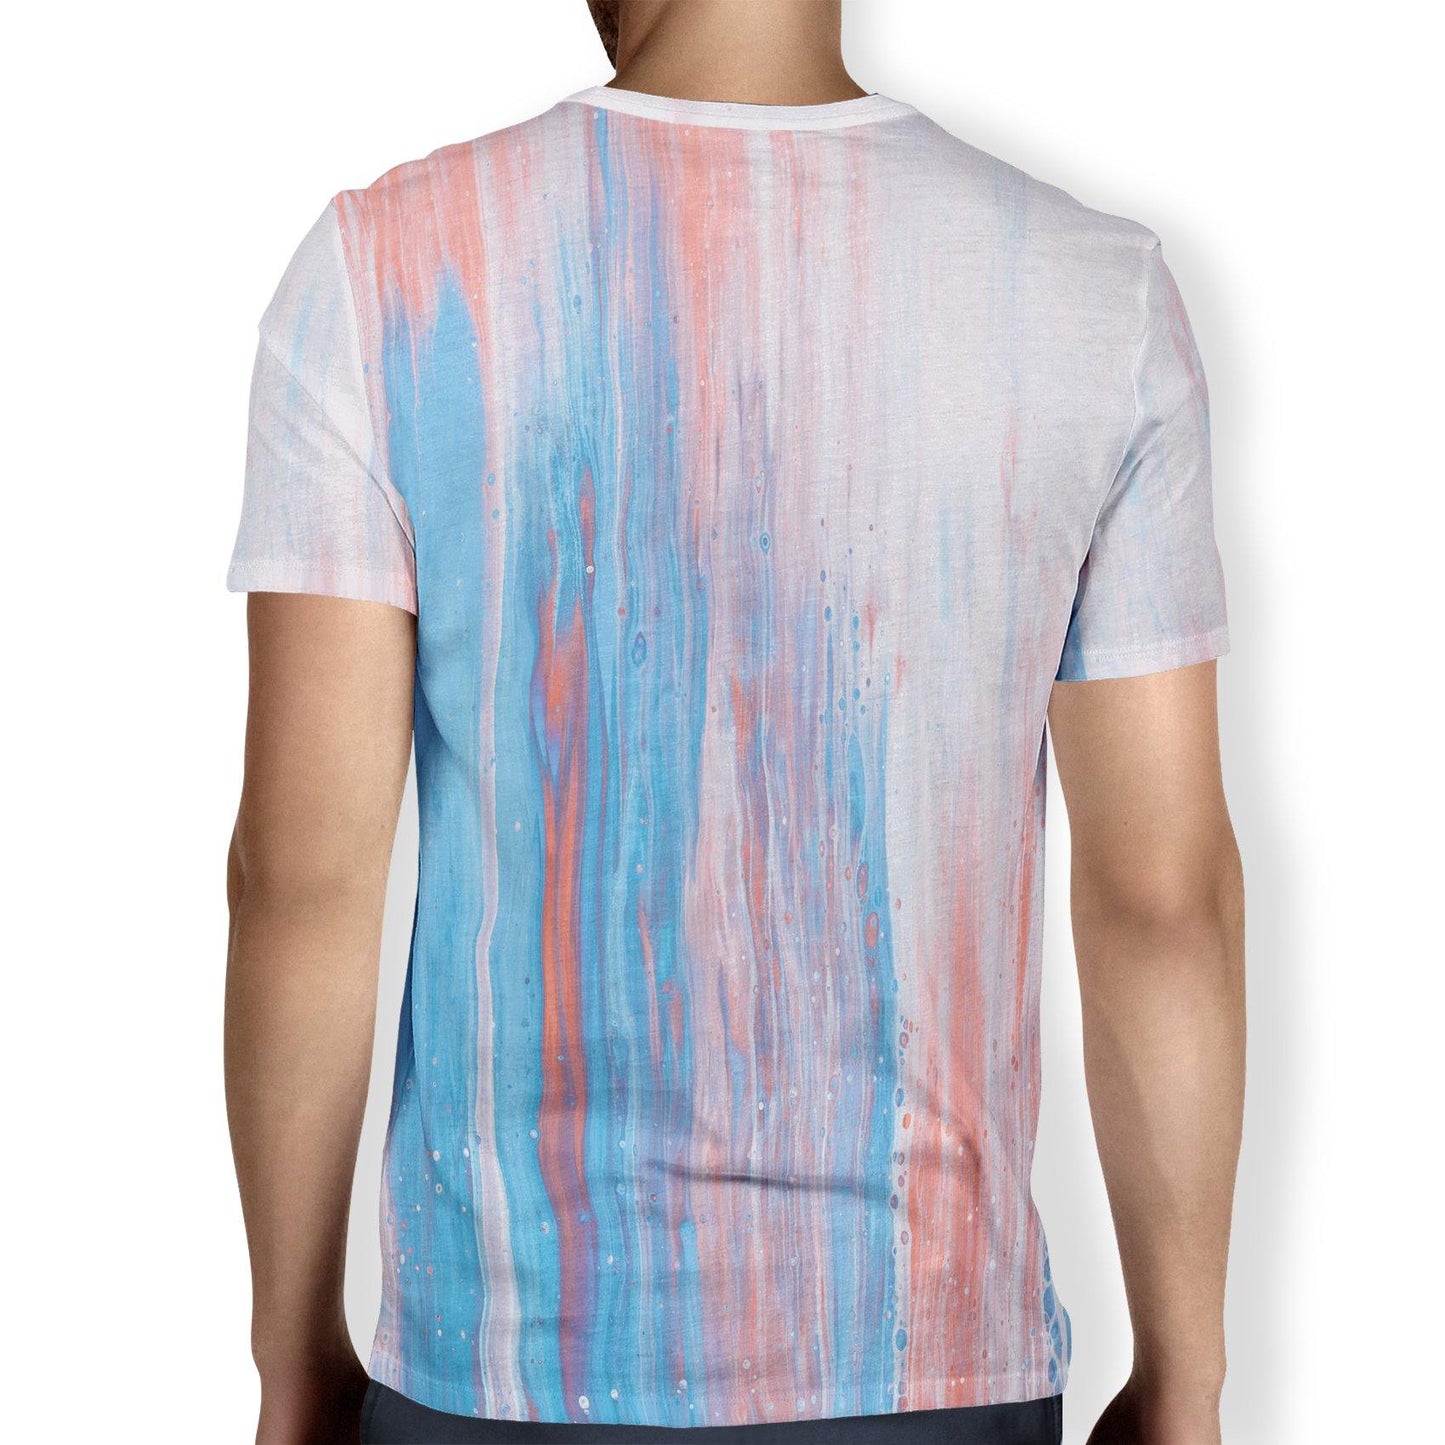 Mixed Paint Men's T-Shirt - USA Made Dropship